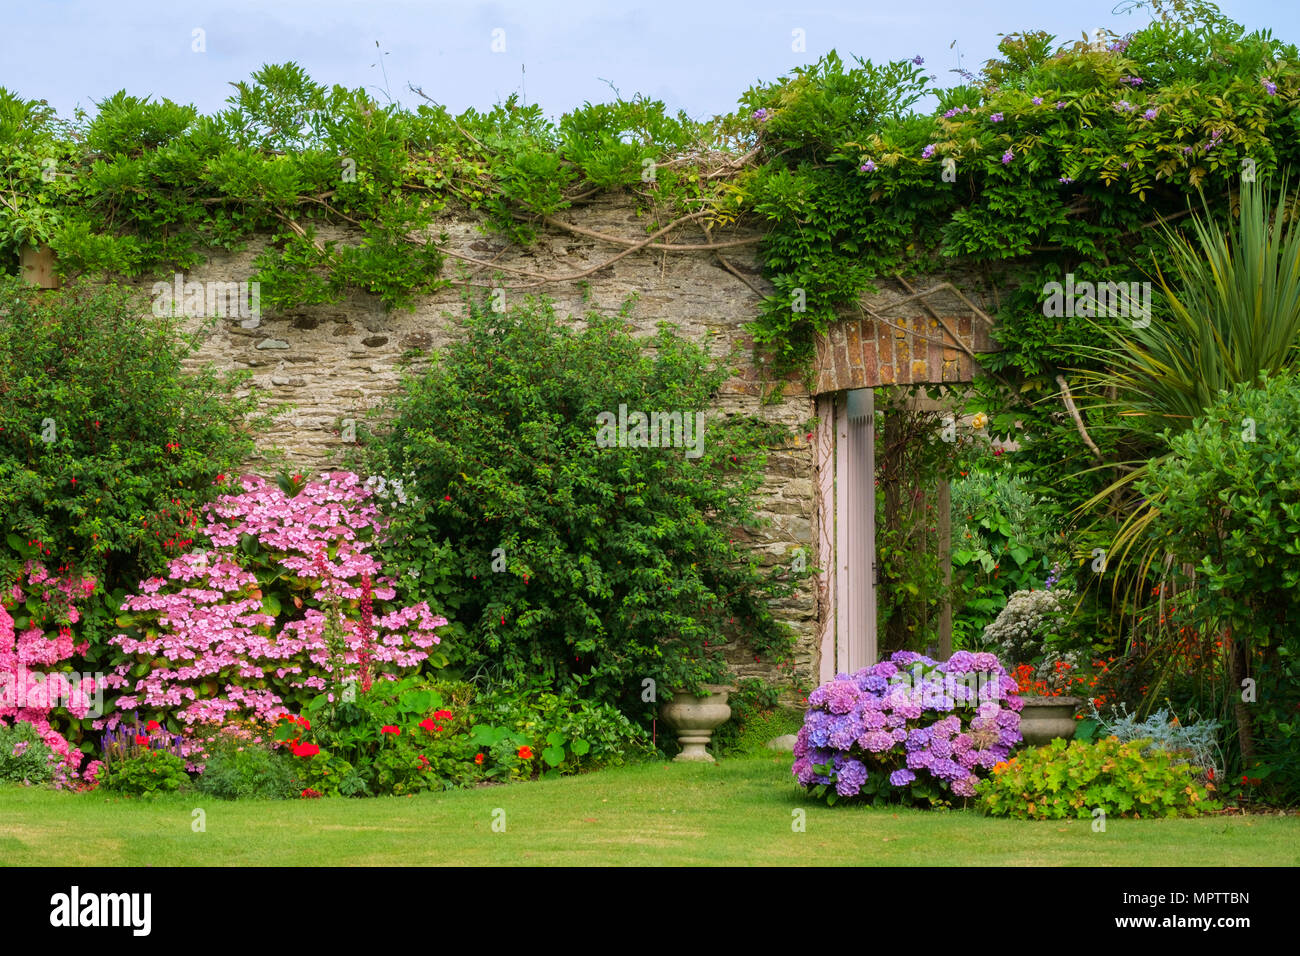 UK gardens. A beautiful summer walled garden border flowerbed display including various Hydrangeas. An open door shows a glimpse of a walled vegetable garden beyond. Stock Photo